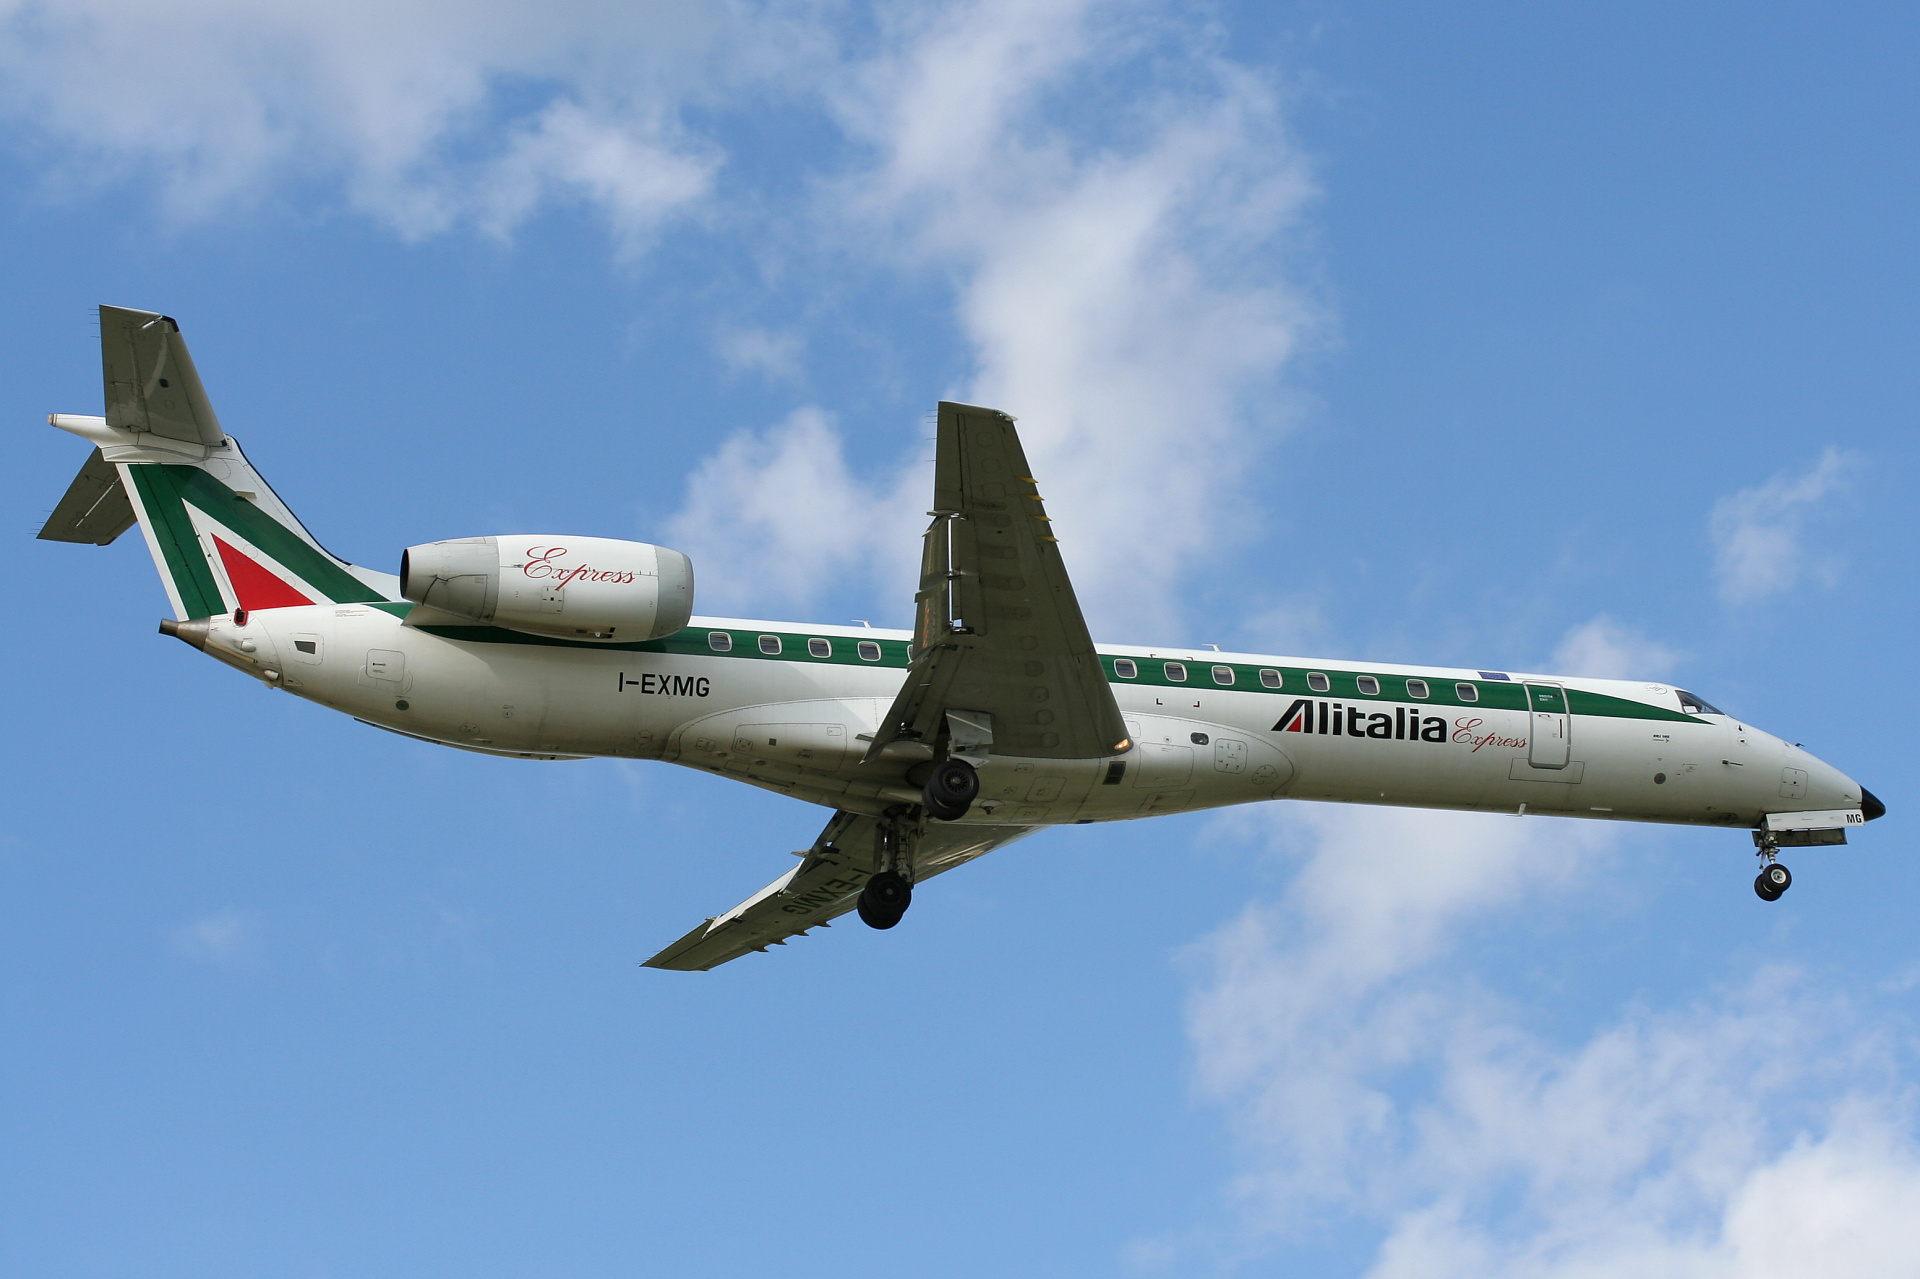 I-EXMG, Alitalia Express (Aircraft » EPWA Spotting » Embraer ERJ-145)